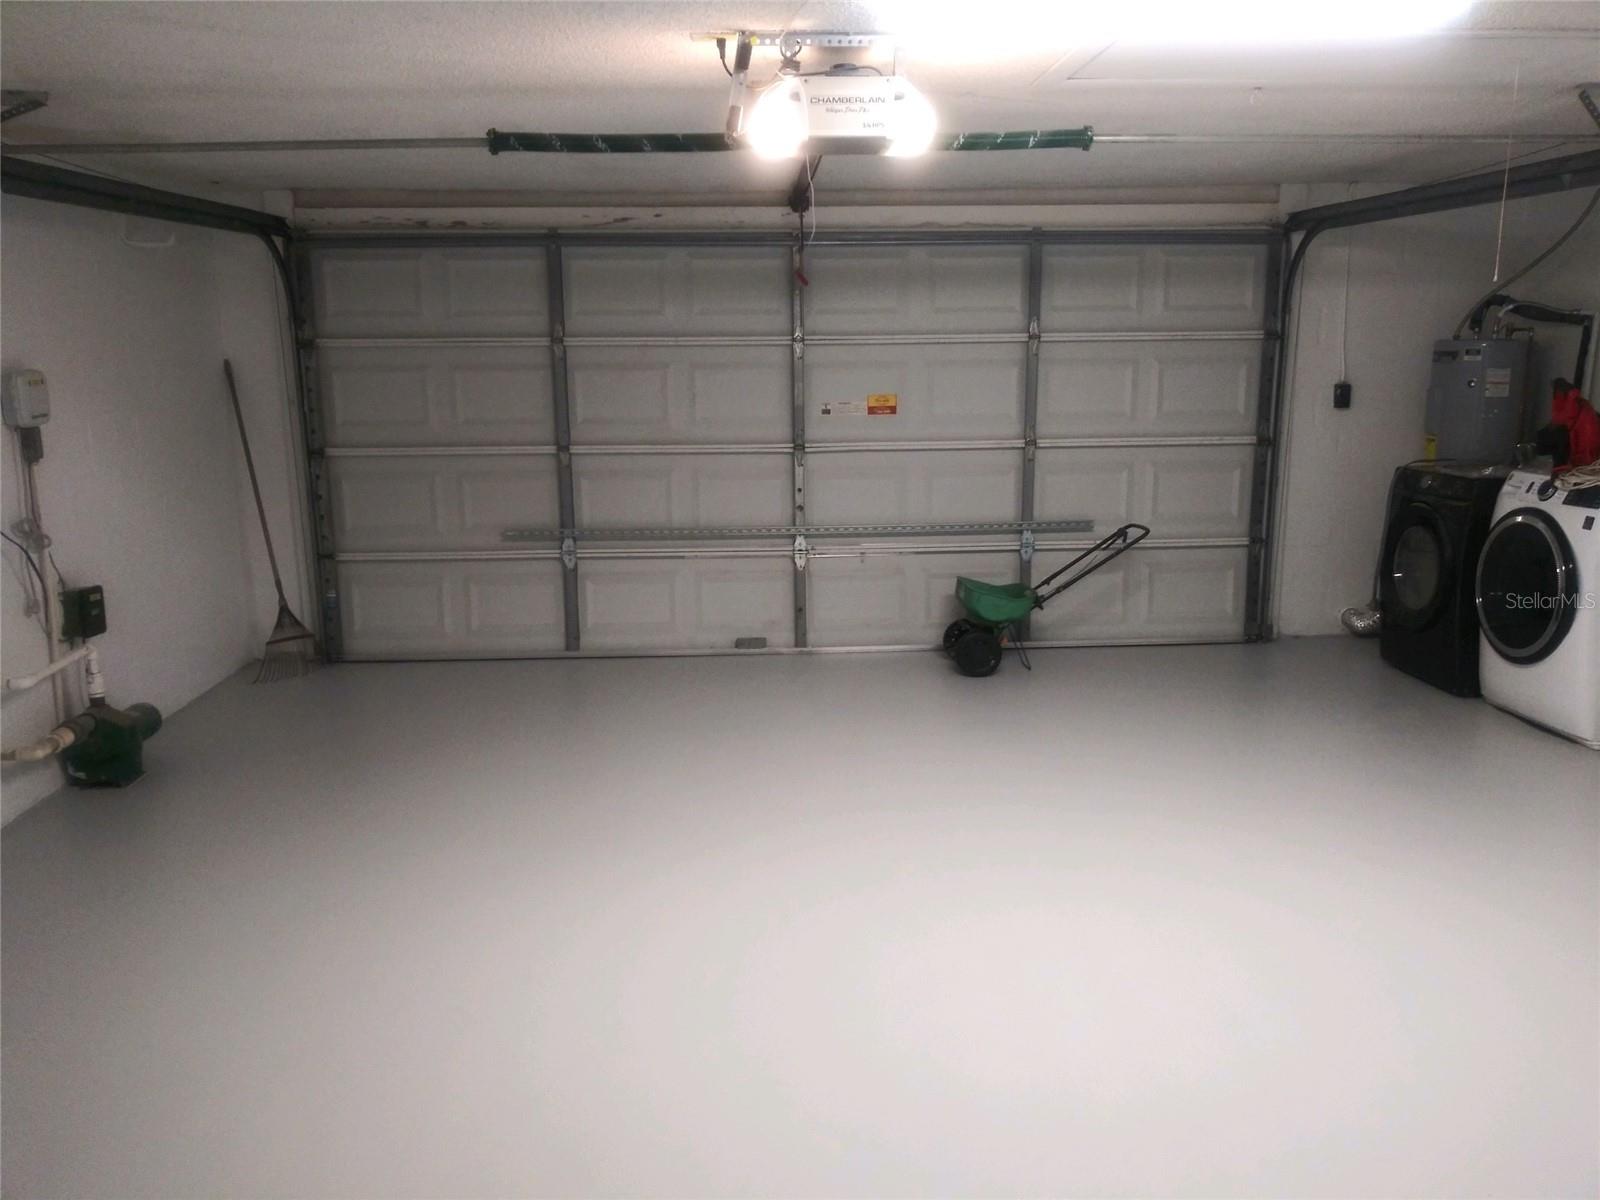 2-car garage.  New paint.